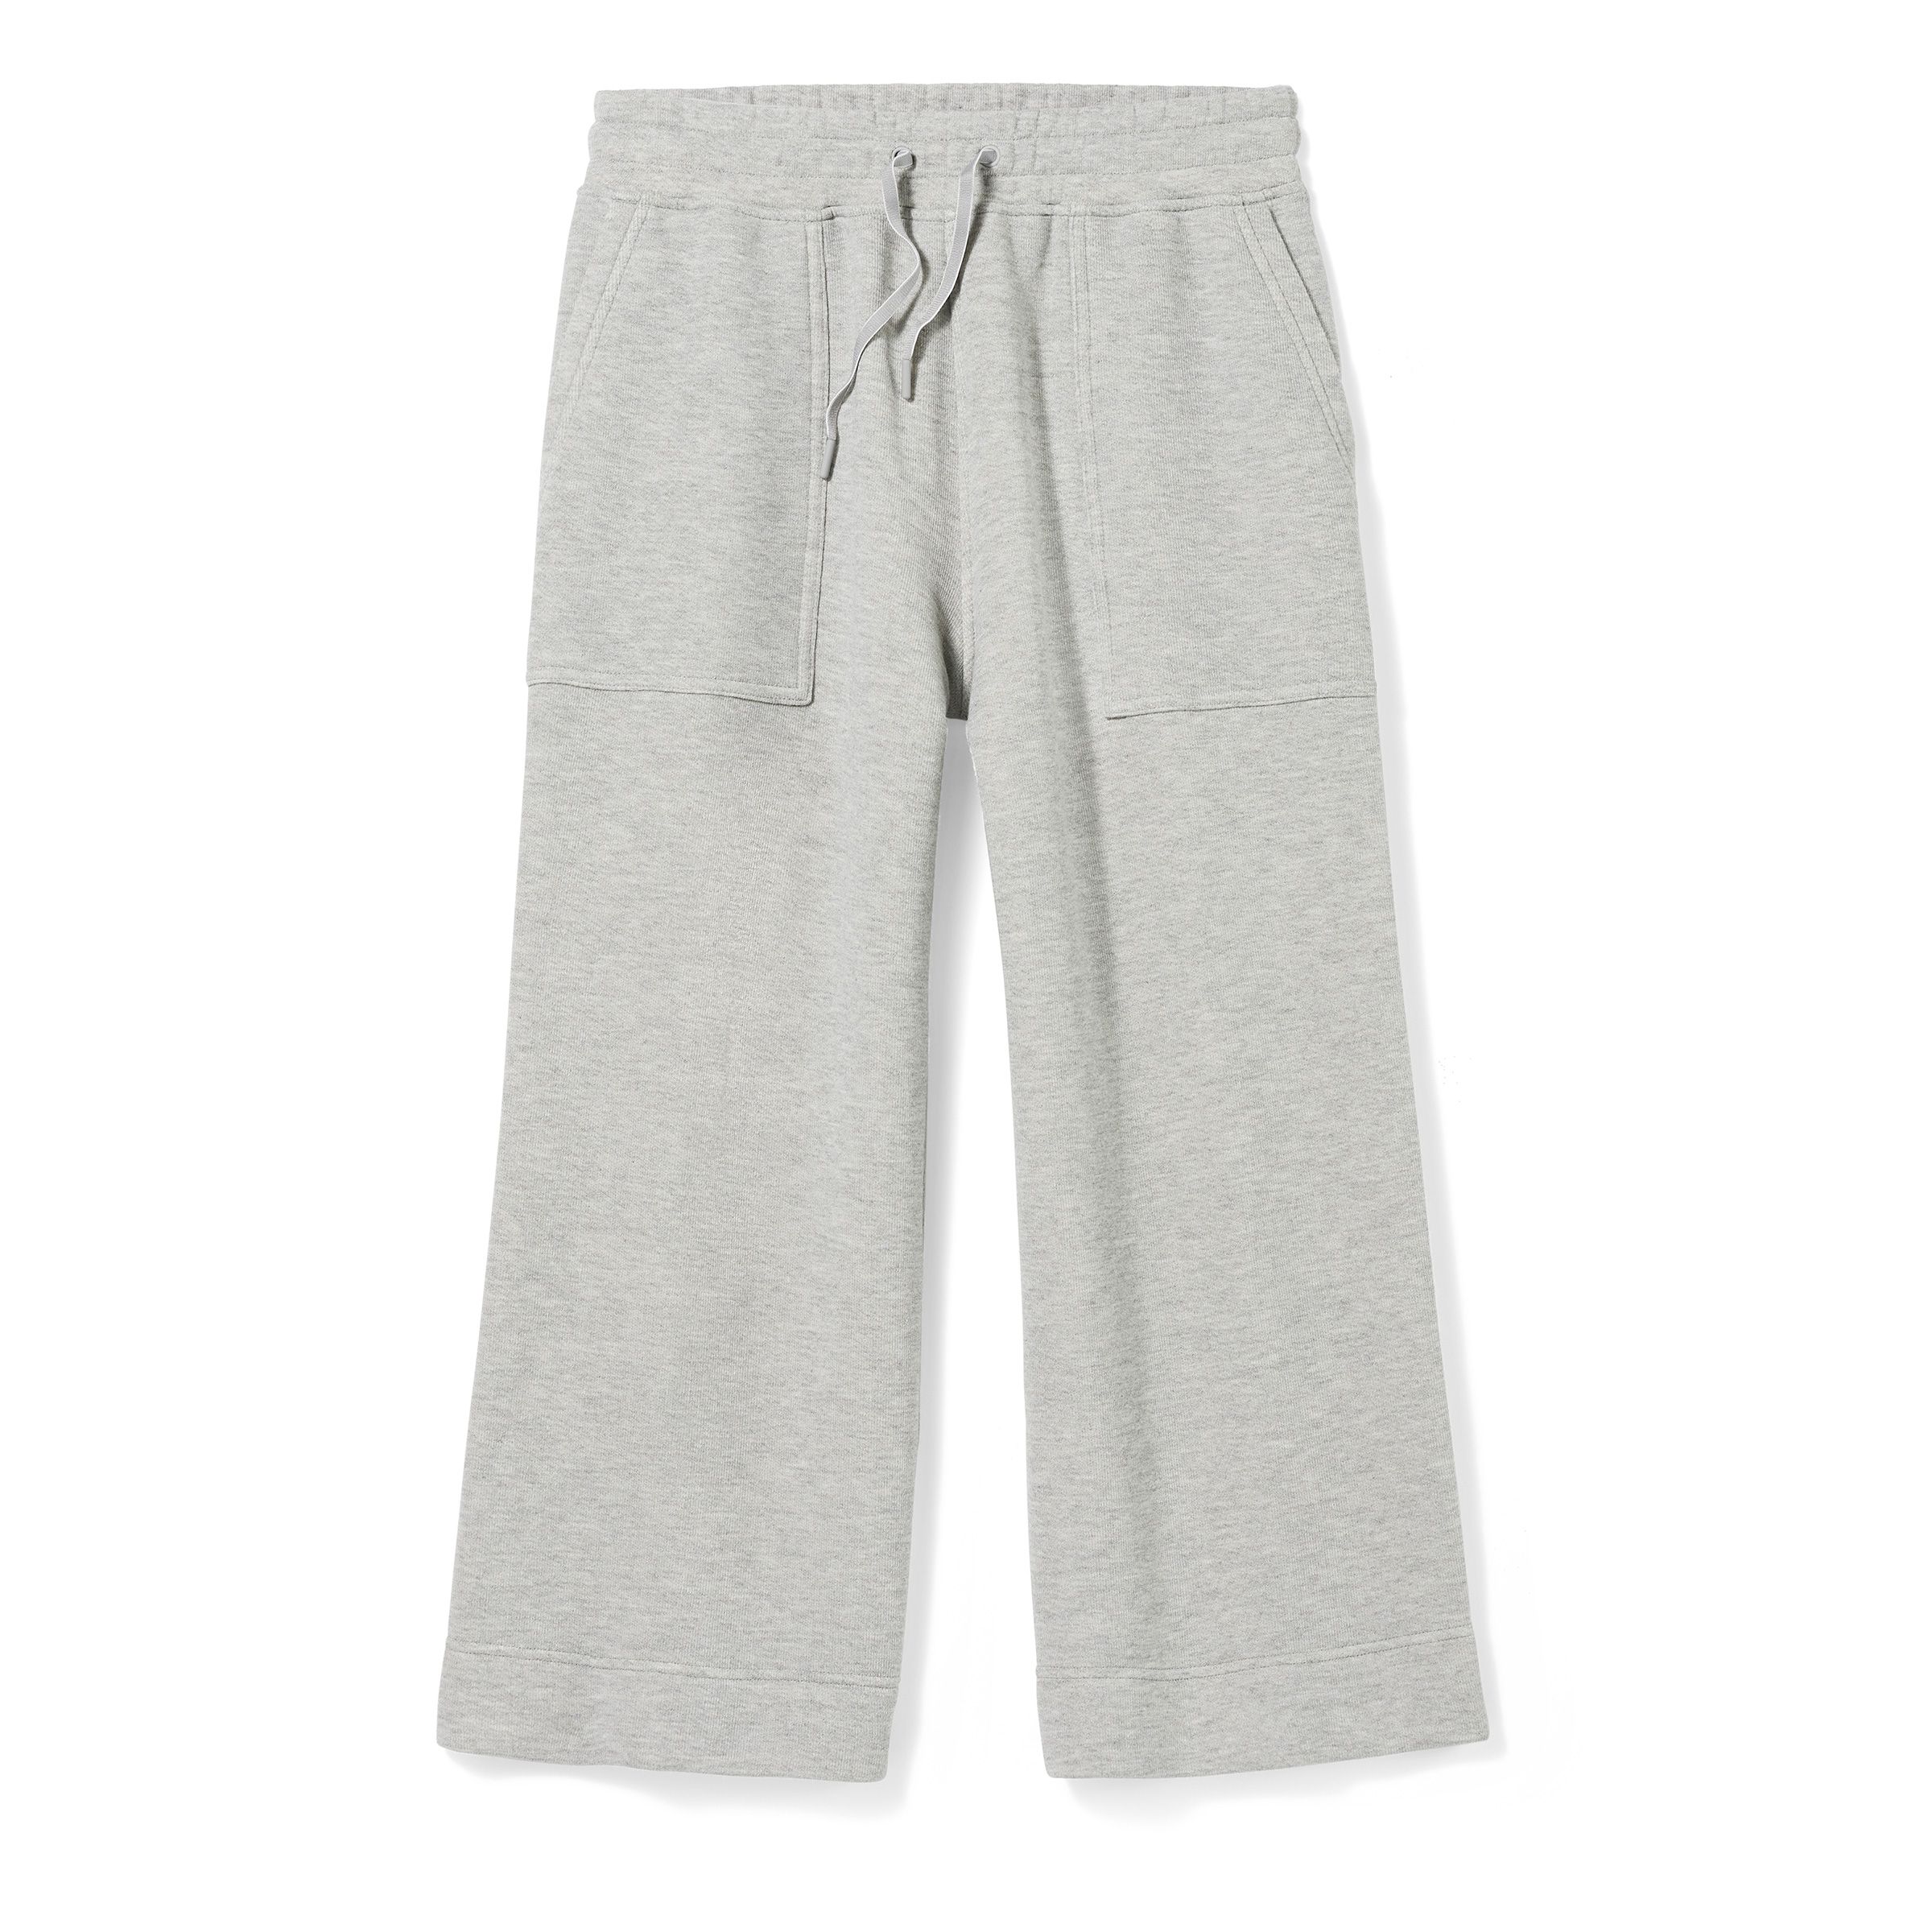 Grey Crop Length Unlined Pants.